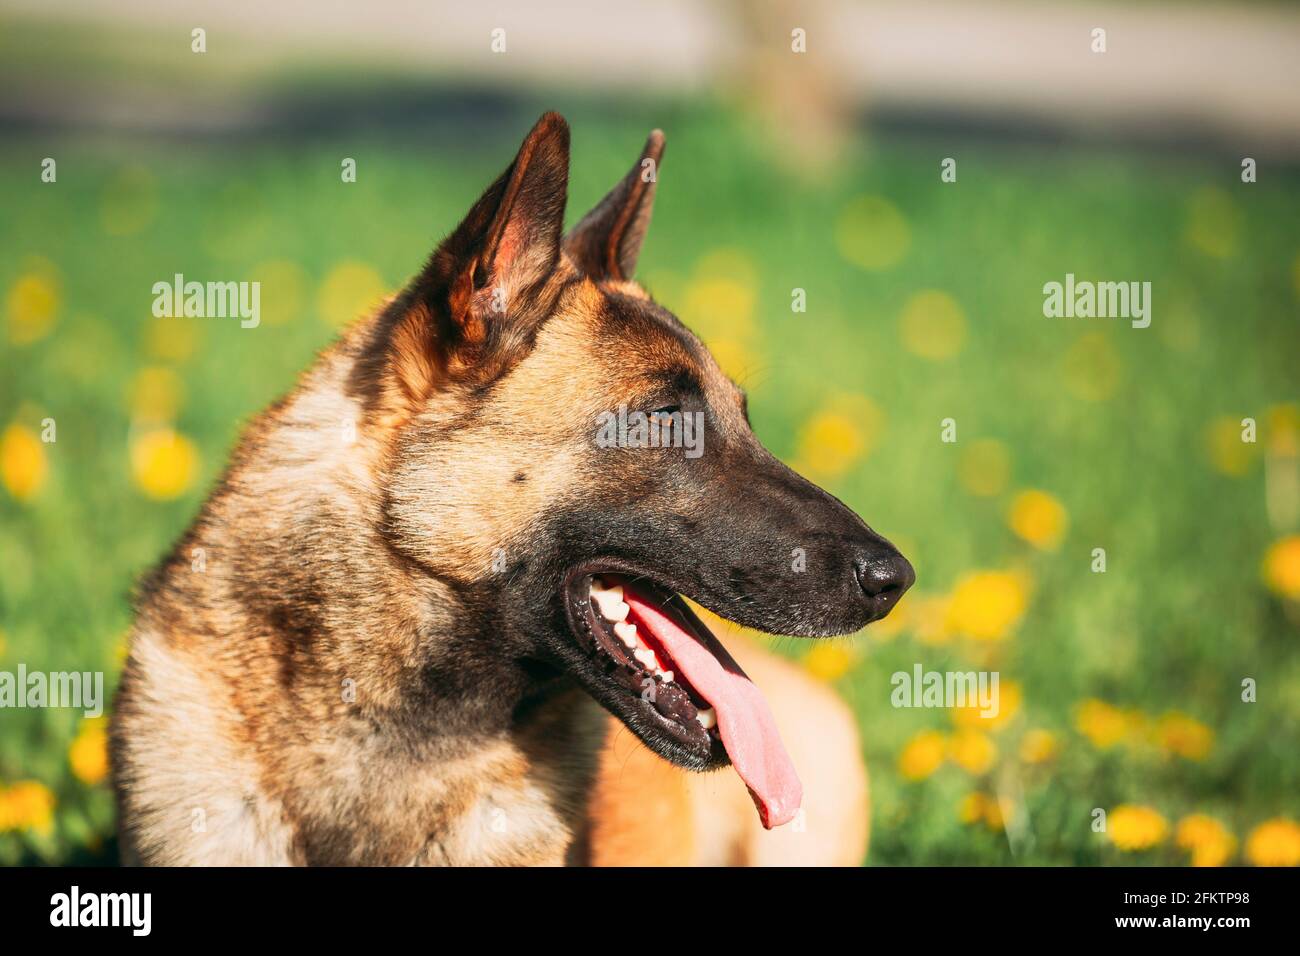 Malinois Dog Sit Outdoors In Grass. Belgian Sheepdog, Shepherd, Belgium, Chien De Berger Belge Dog. Stock Photo